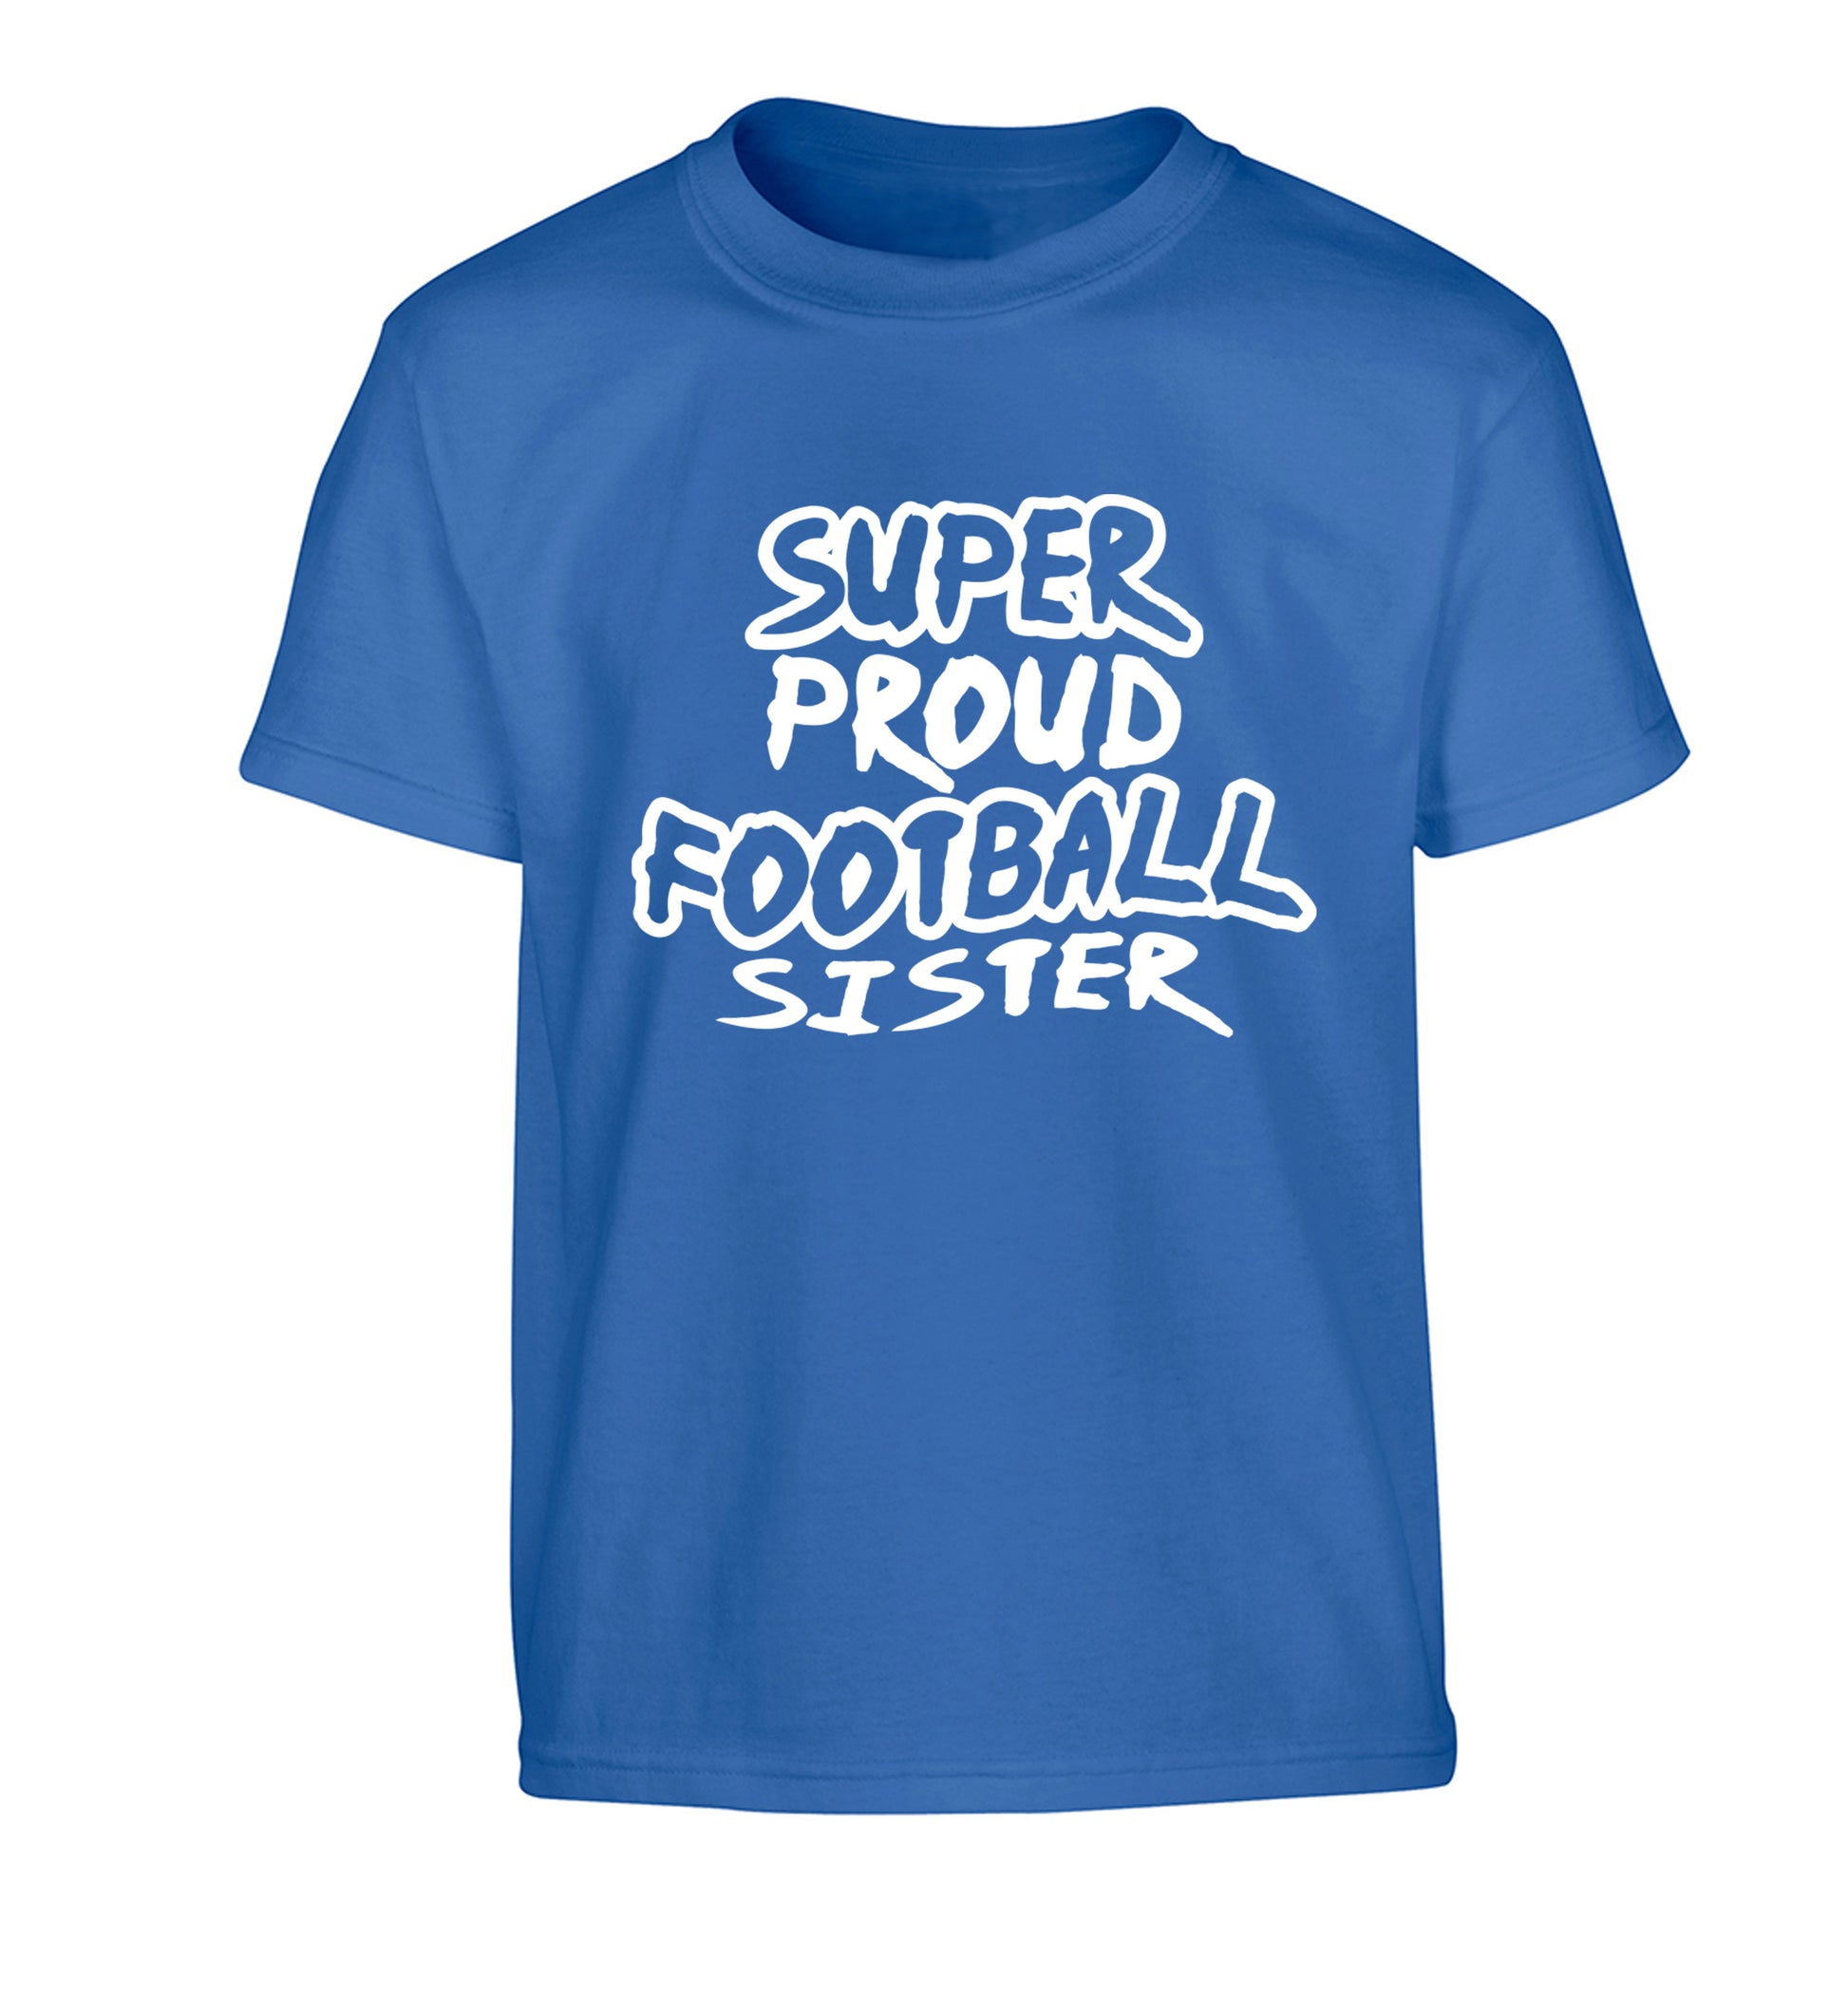 Super proud football sister Children's blue Tshirt 12-14 Years